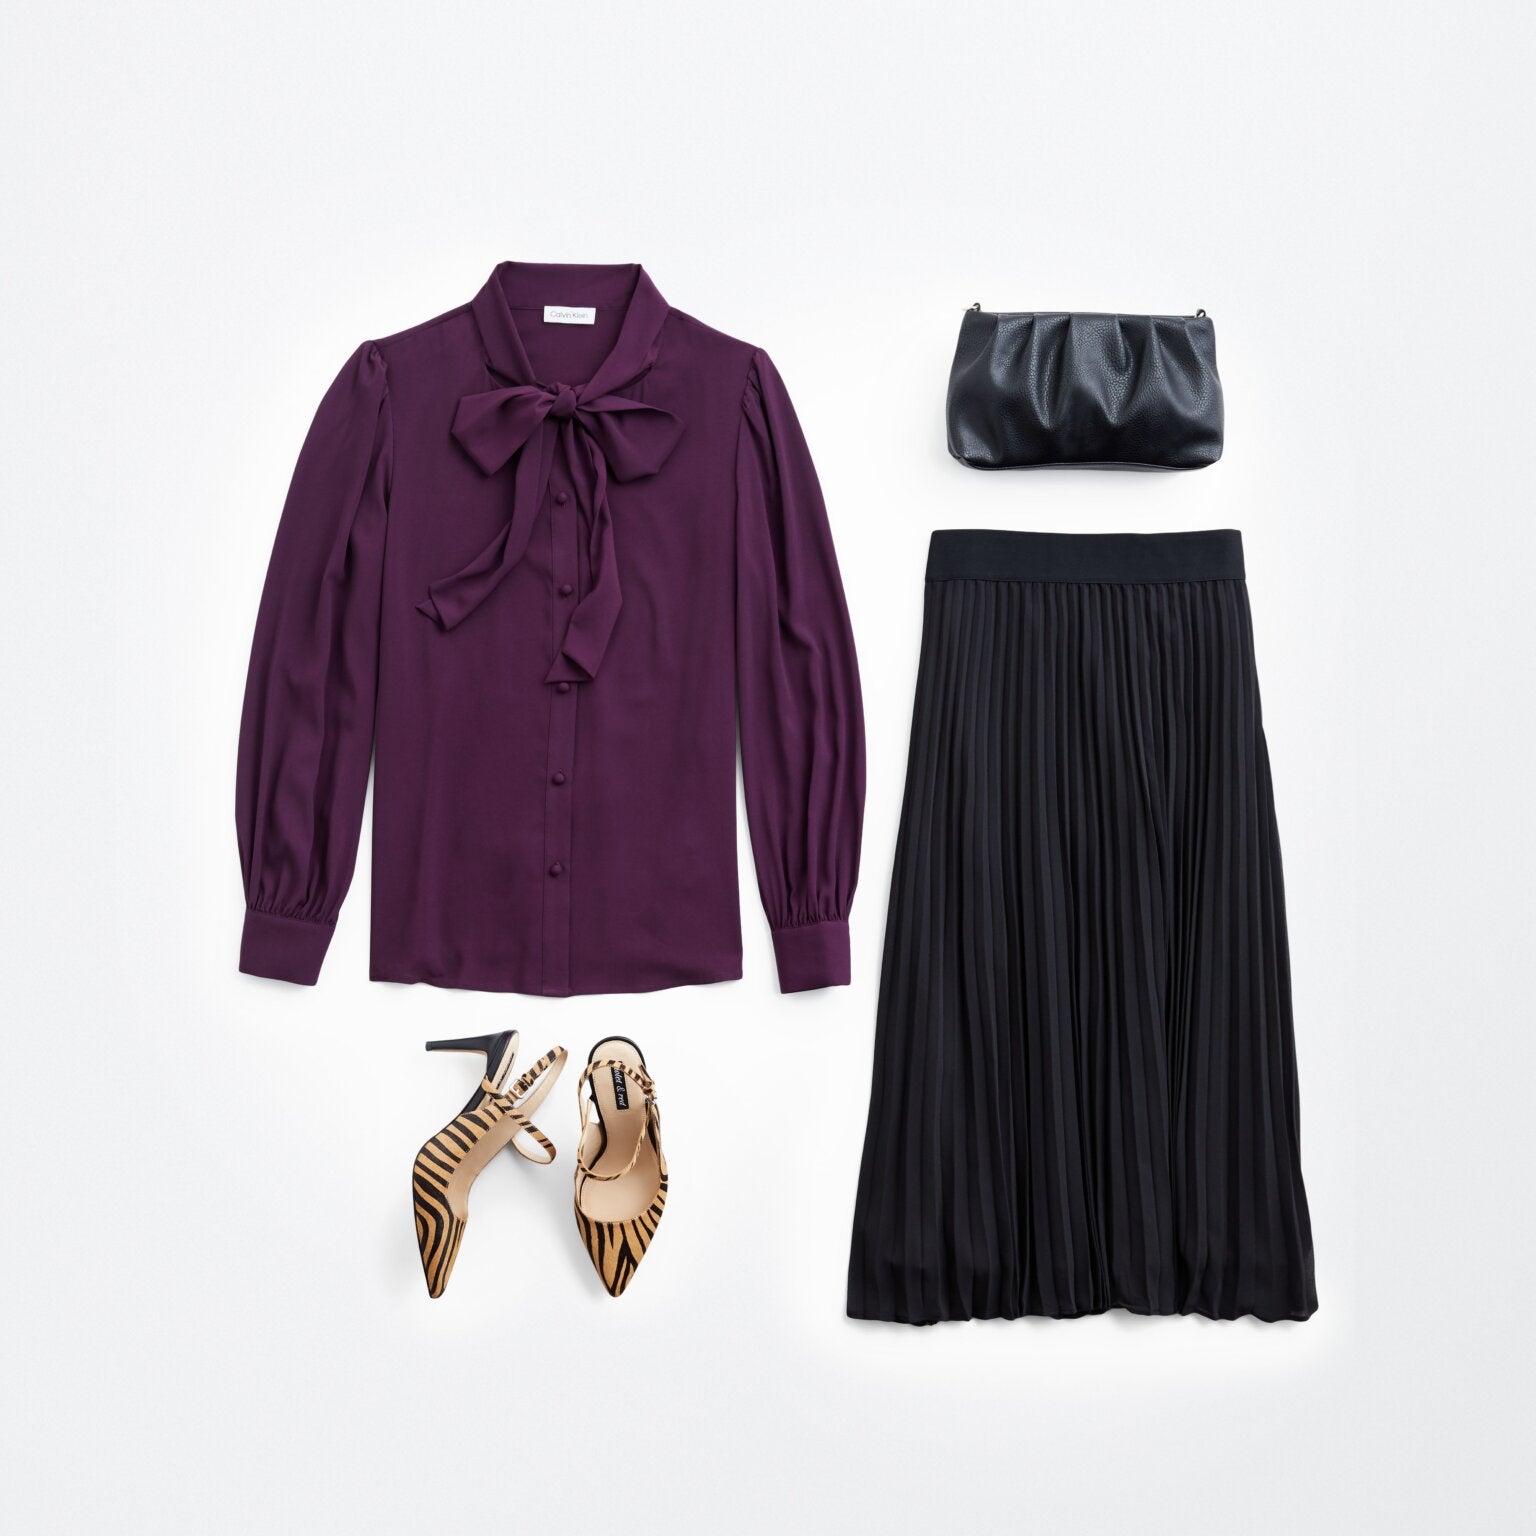 Jewel tone - Amethyst Purple - Purple blouse flat lay, flowy skirt, black bag, heels